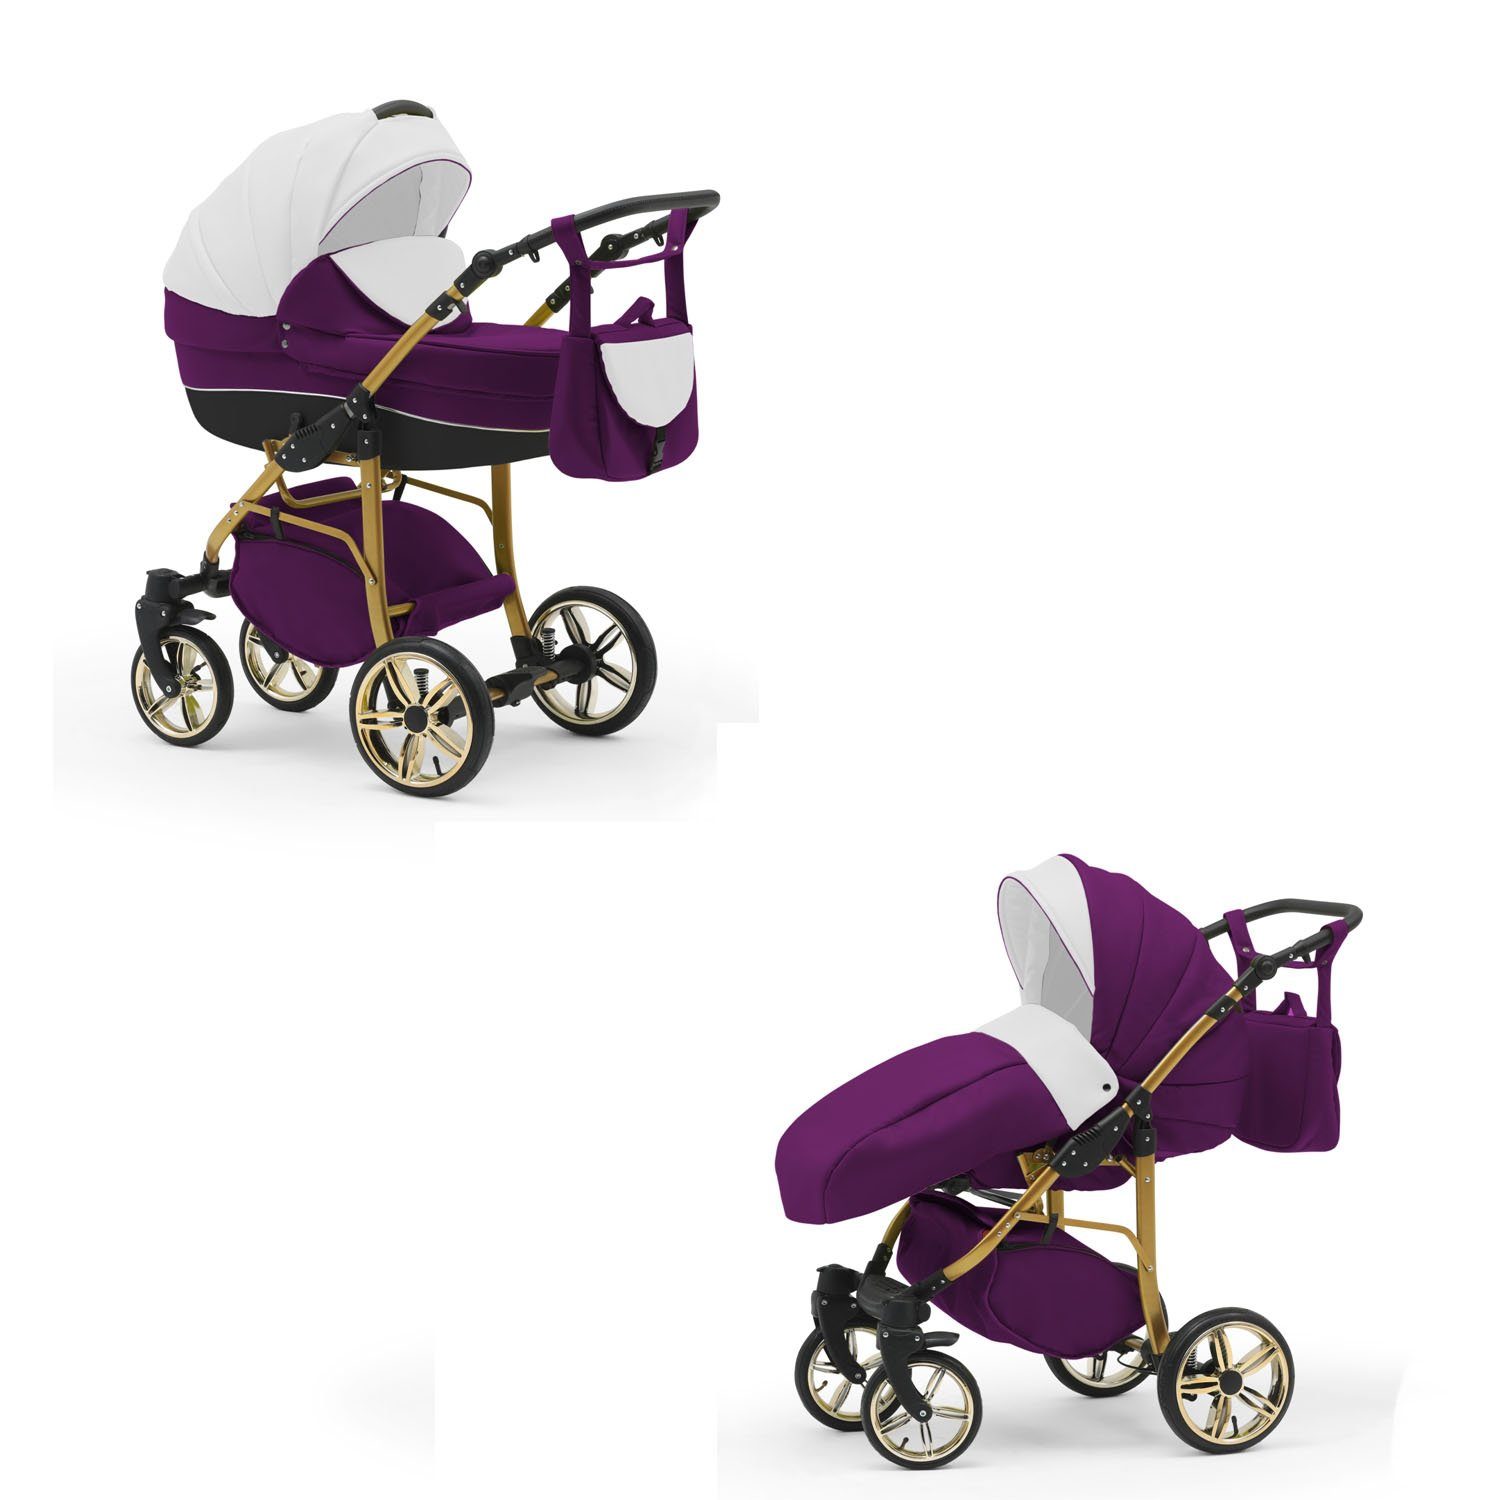 babies-on-wheels Kombi-Kinderwagen 2 in in Kinderwagen-Set Weiß-Lila-Schwarz - 46 - Teile 13 1 Cosmo Farben Gold